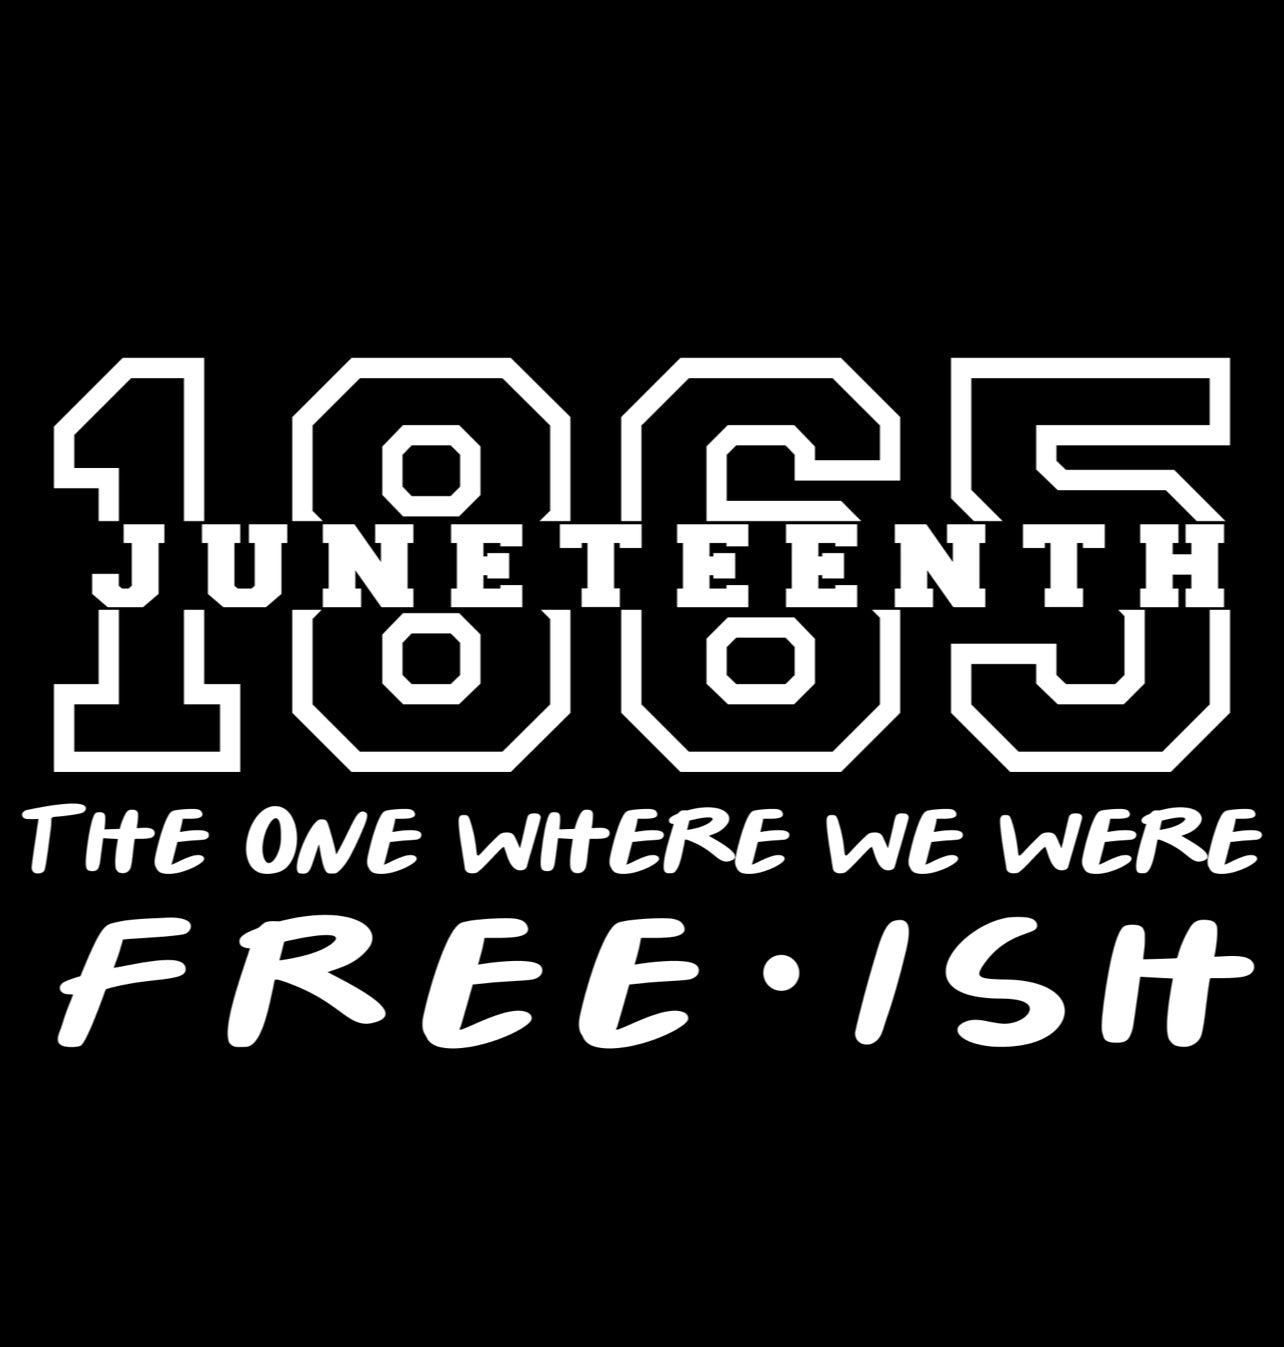 1865 Free-Ish